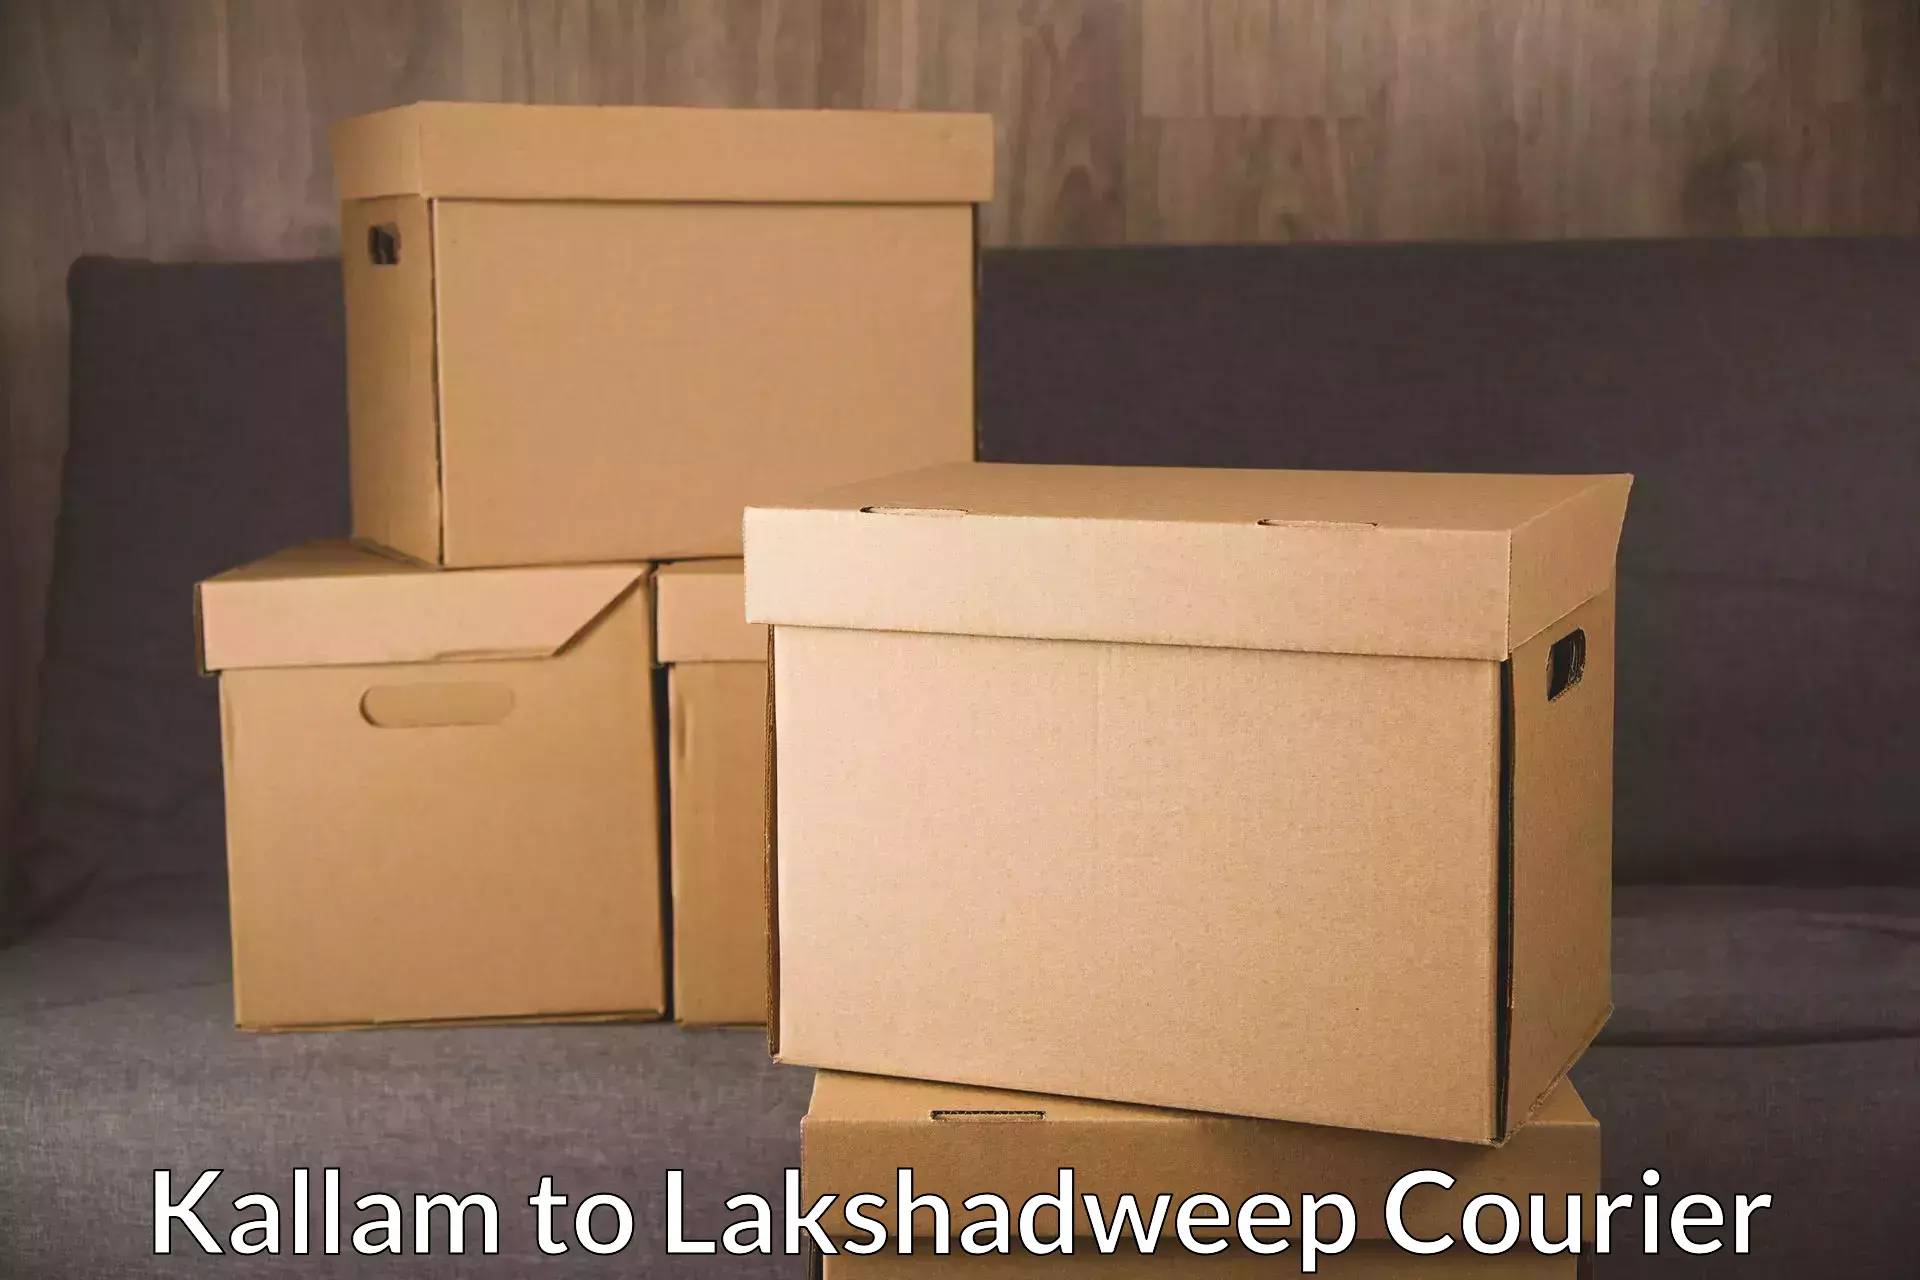 International parcel service Kallam to Lakshadweep